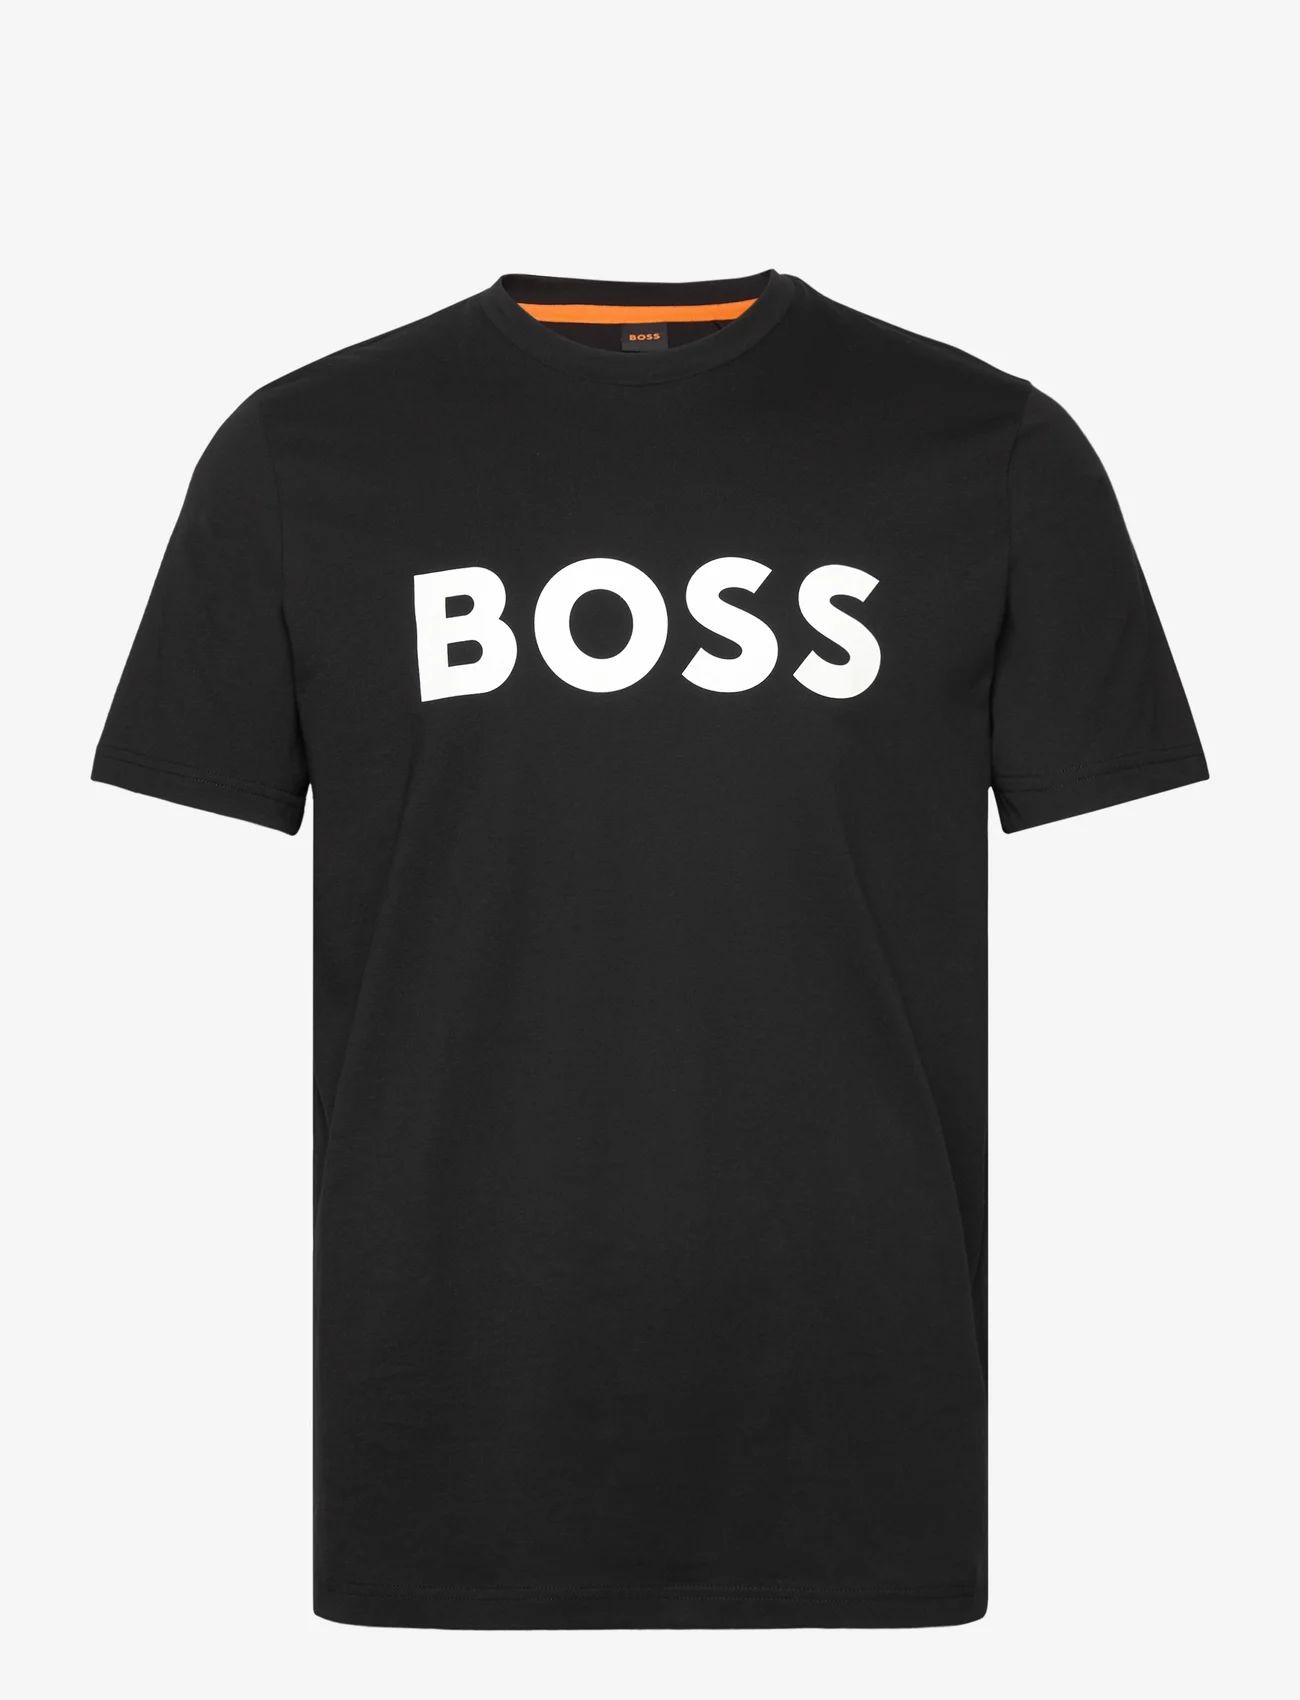 BOSS - Thinking 1 - short-sleeved t-shirts - black - 0